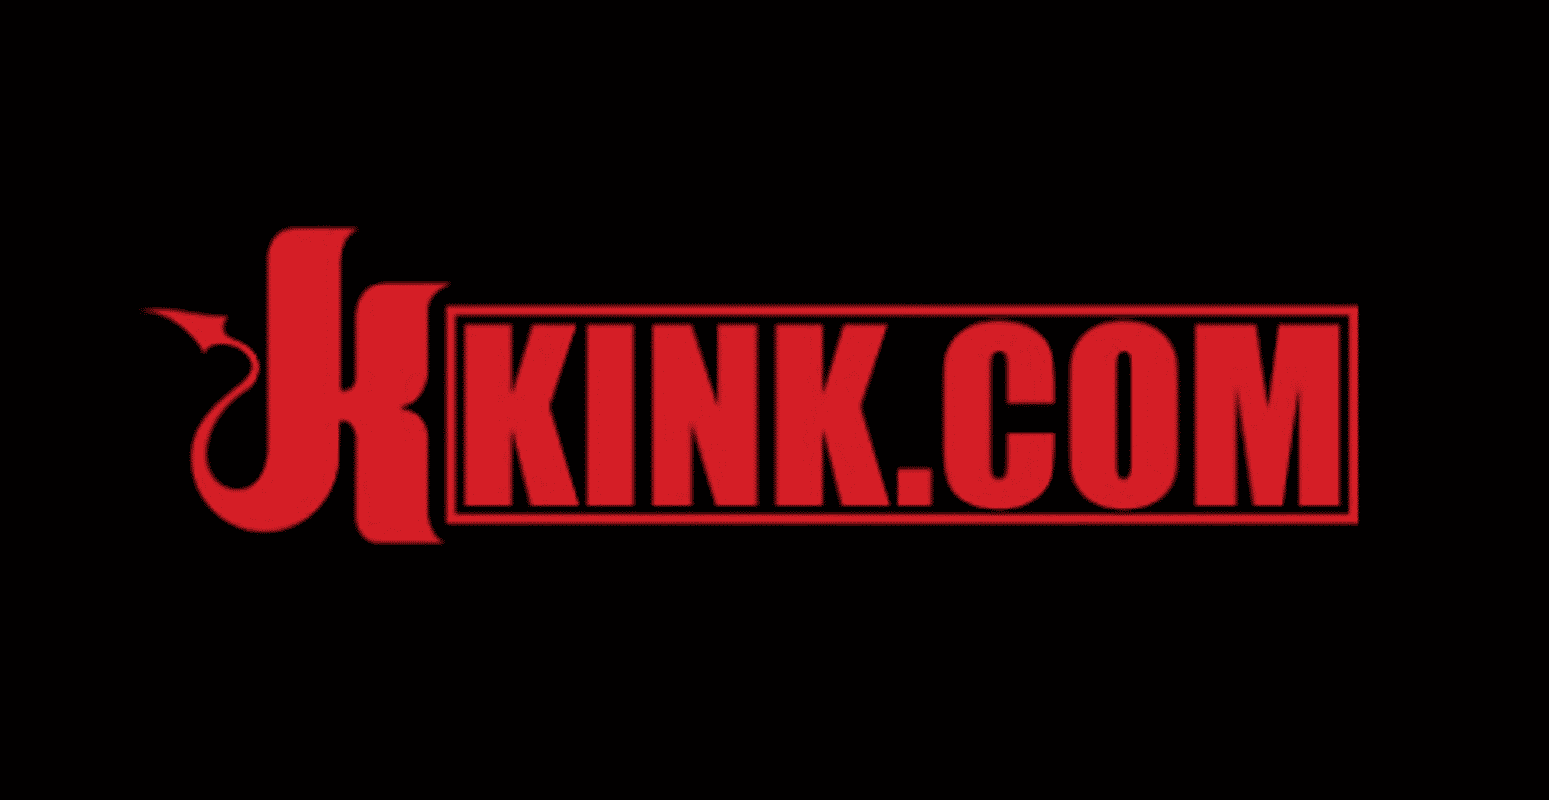 Kink com logo on a background.